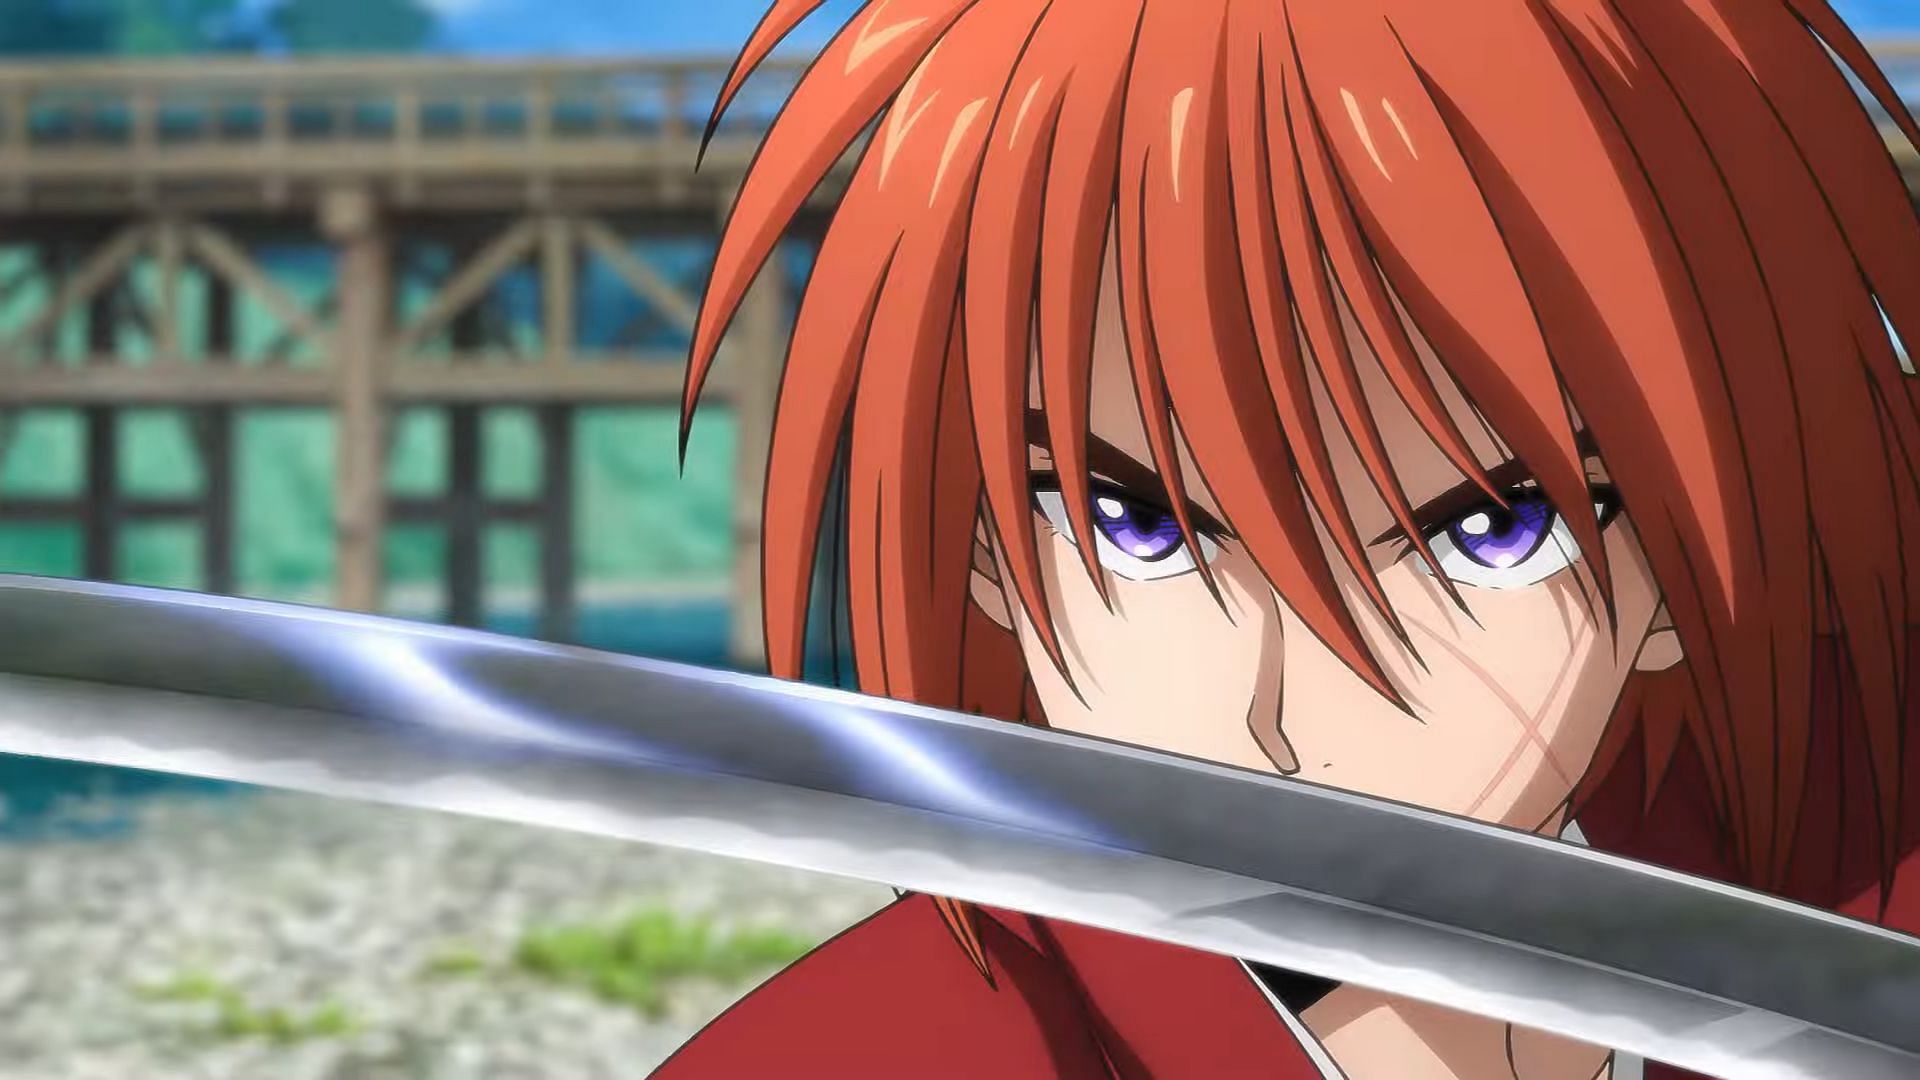 Hiten (From Rurouni Kenshin 2023: Samurai X) Official Tiktok